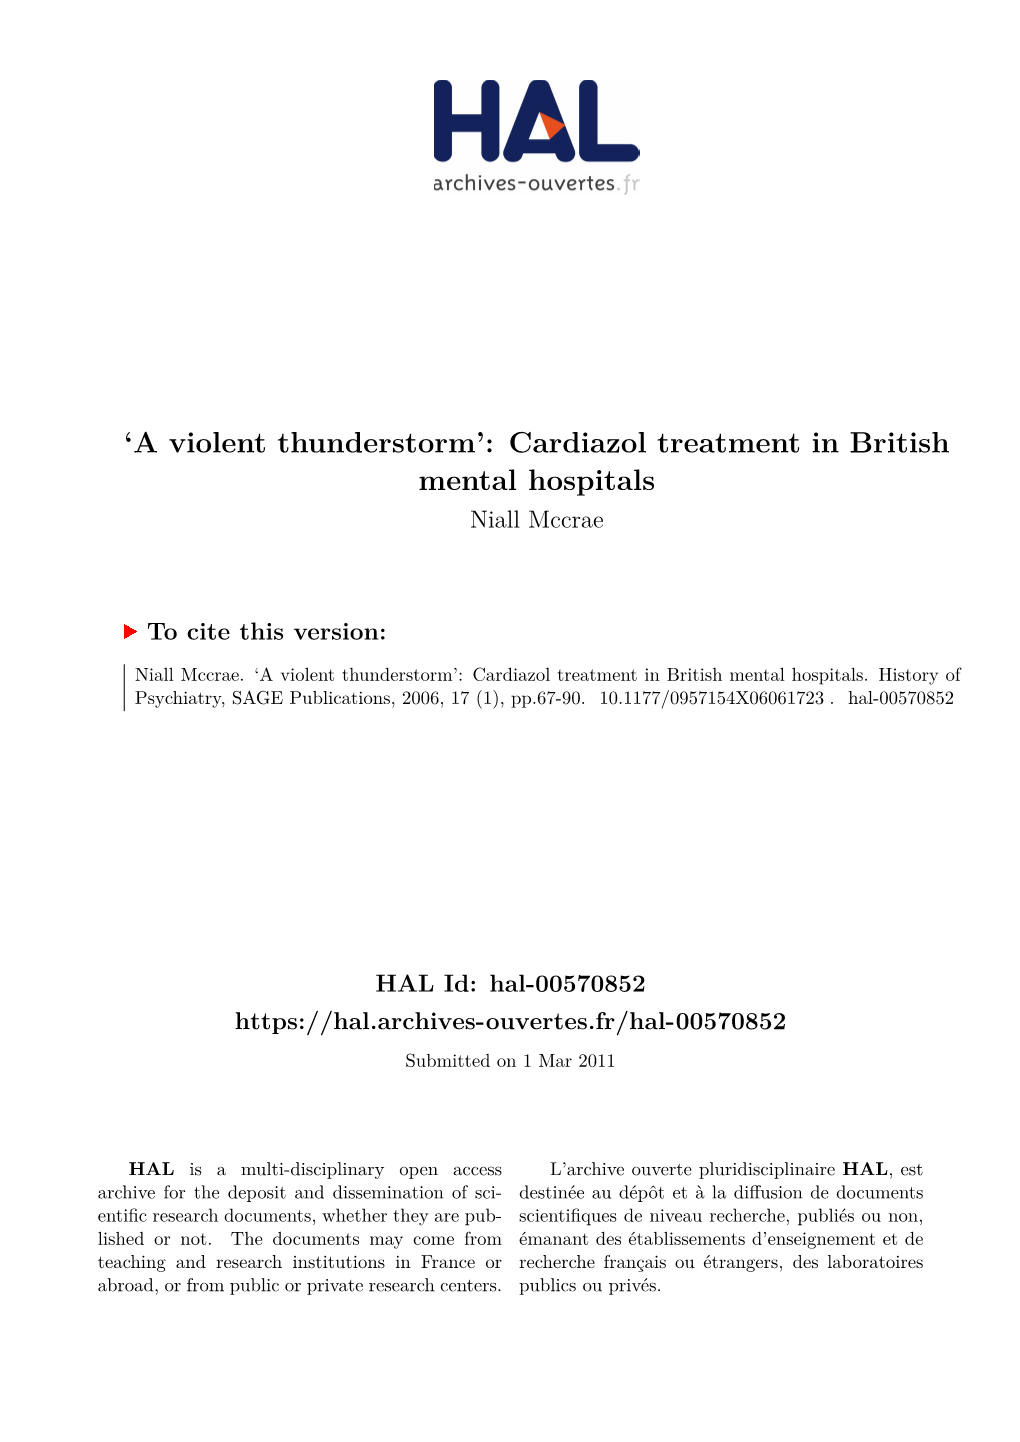 Cardiazol Treatment in British Mental Hospitals Niall Mccrae